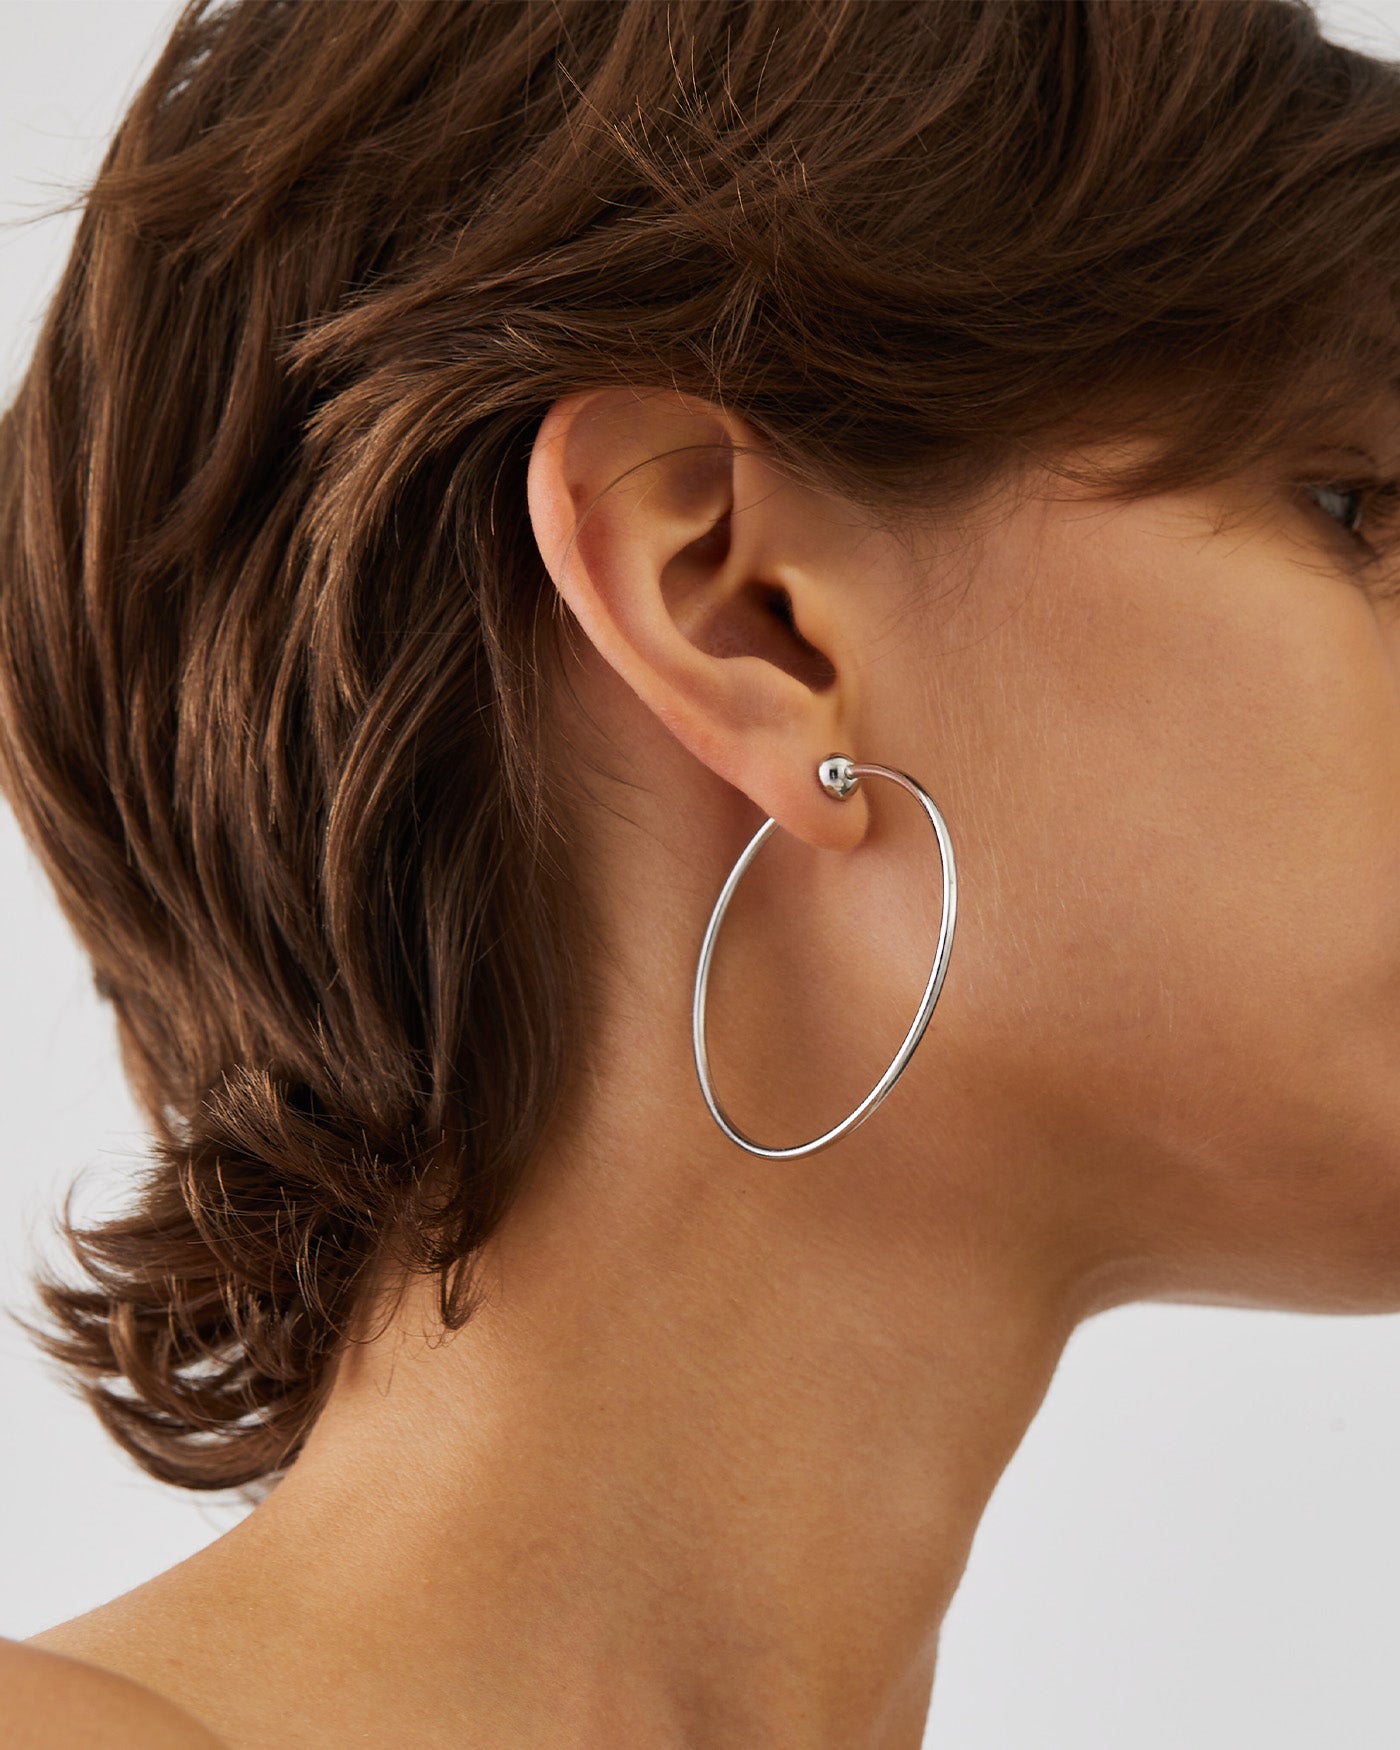 Cheap Earrings for Women: Gold, Silver, Hoop, Statement 2022 | The  Strategist